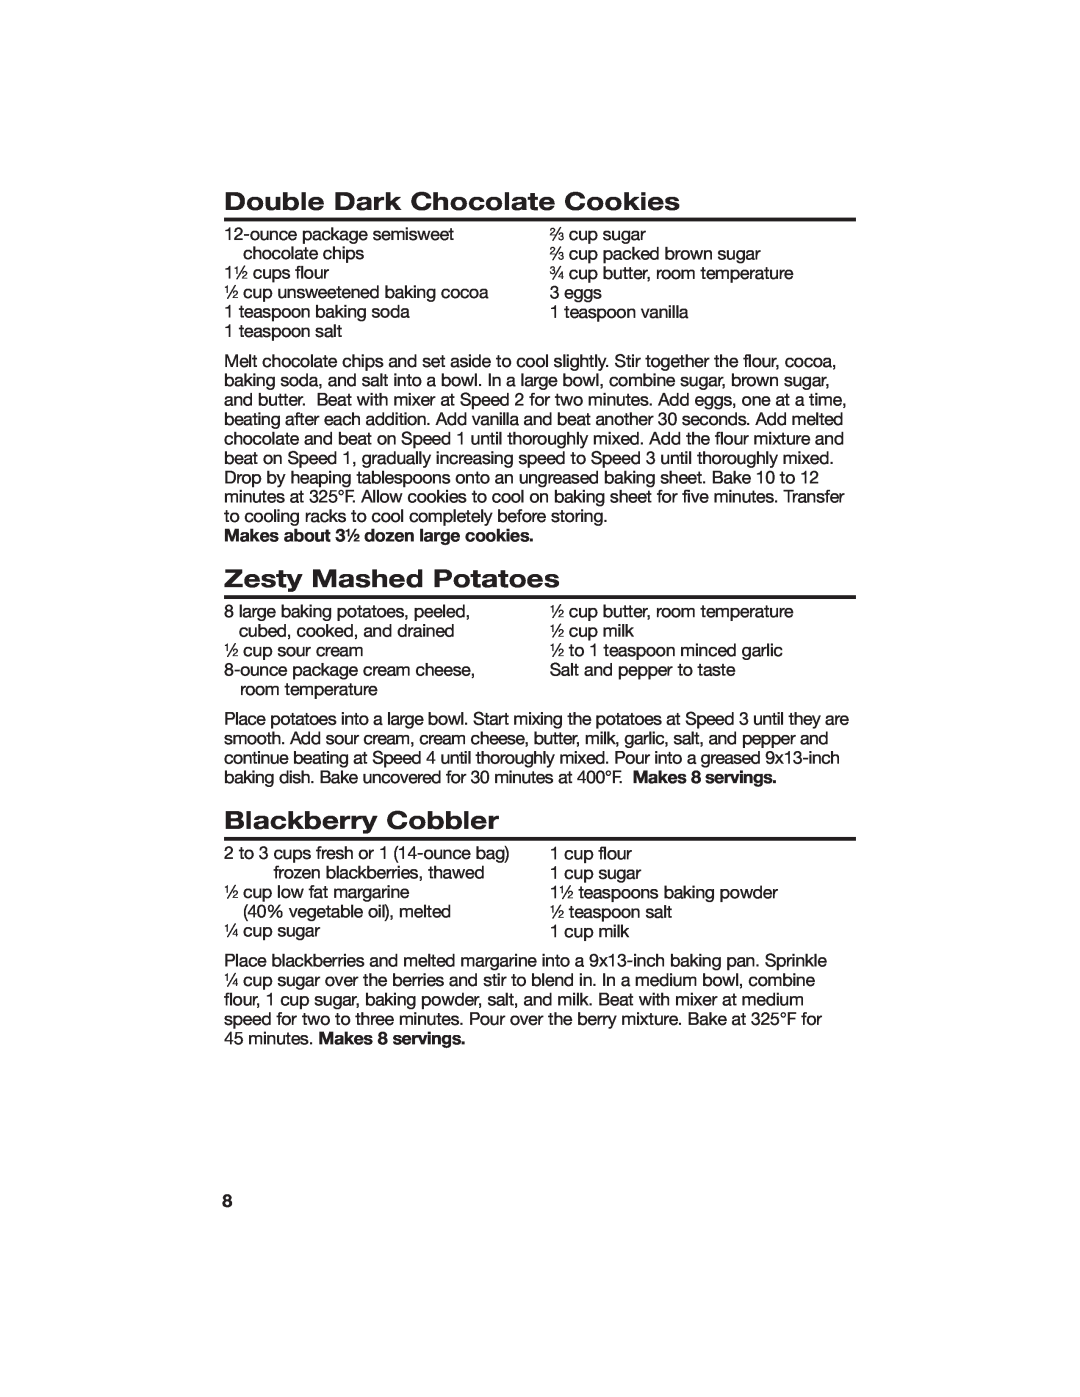 Hamilton Beach 840086200 manual Double Dark Chocolate Cookies, Zesty Mashed Potatoes, Blackberry Cobbler 